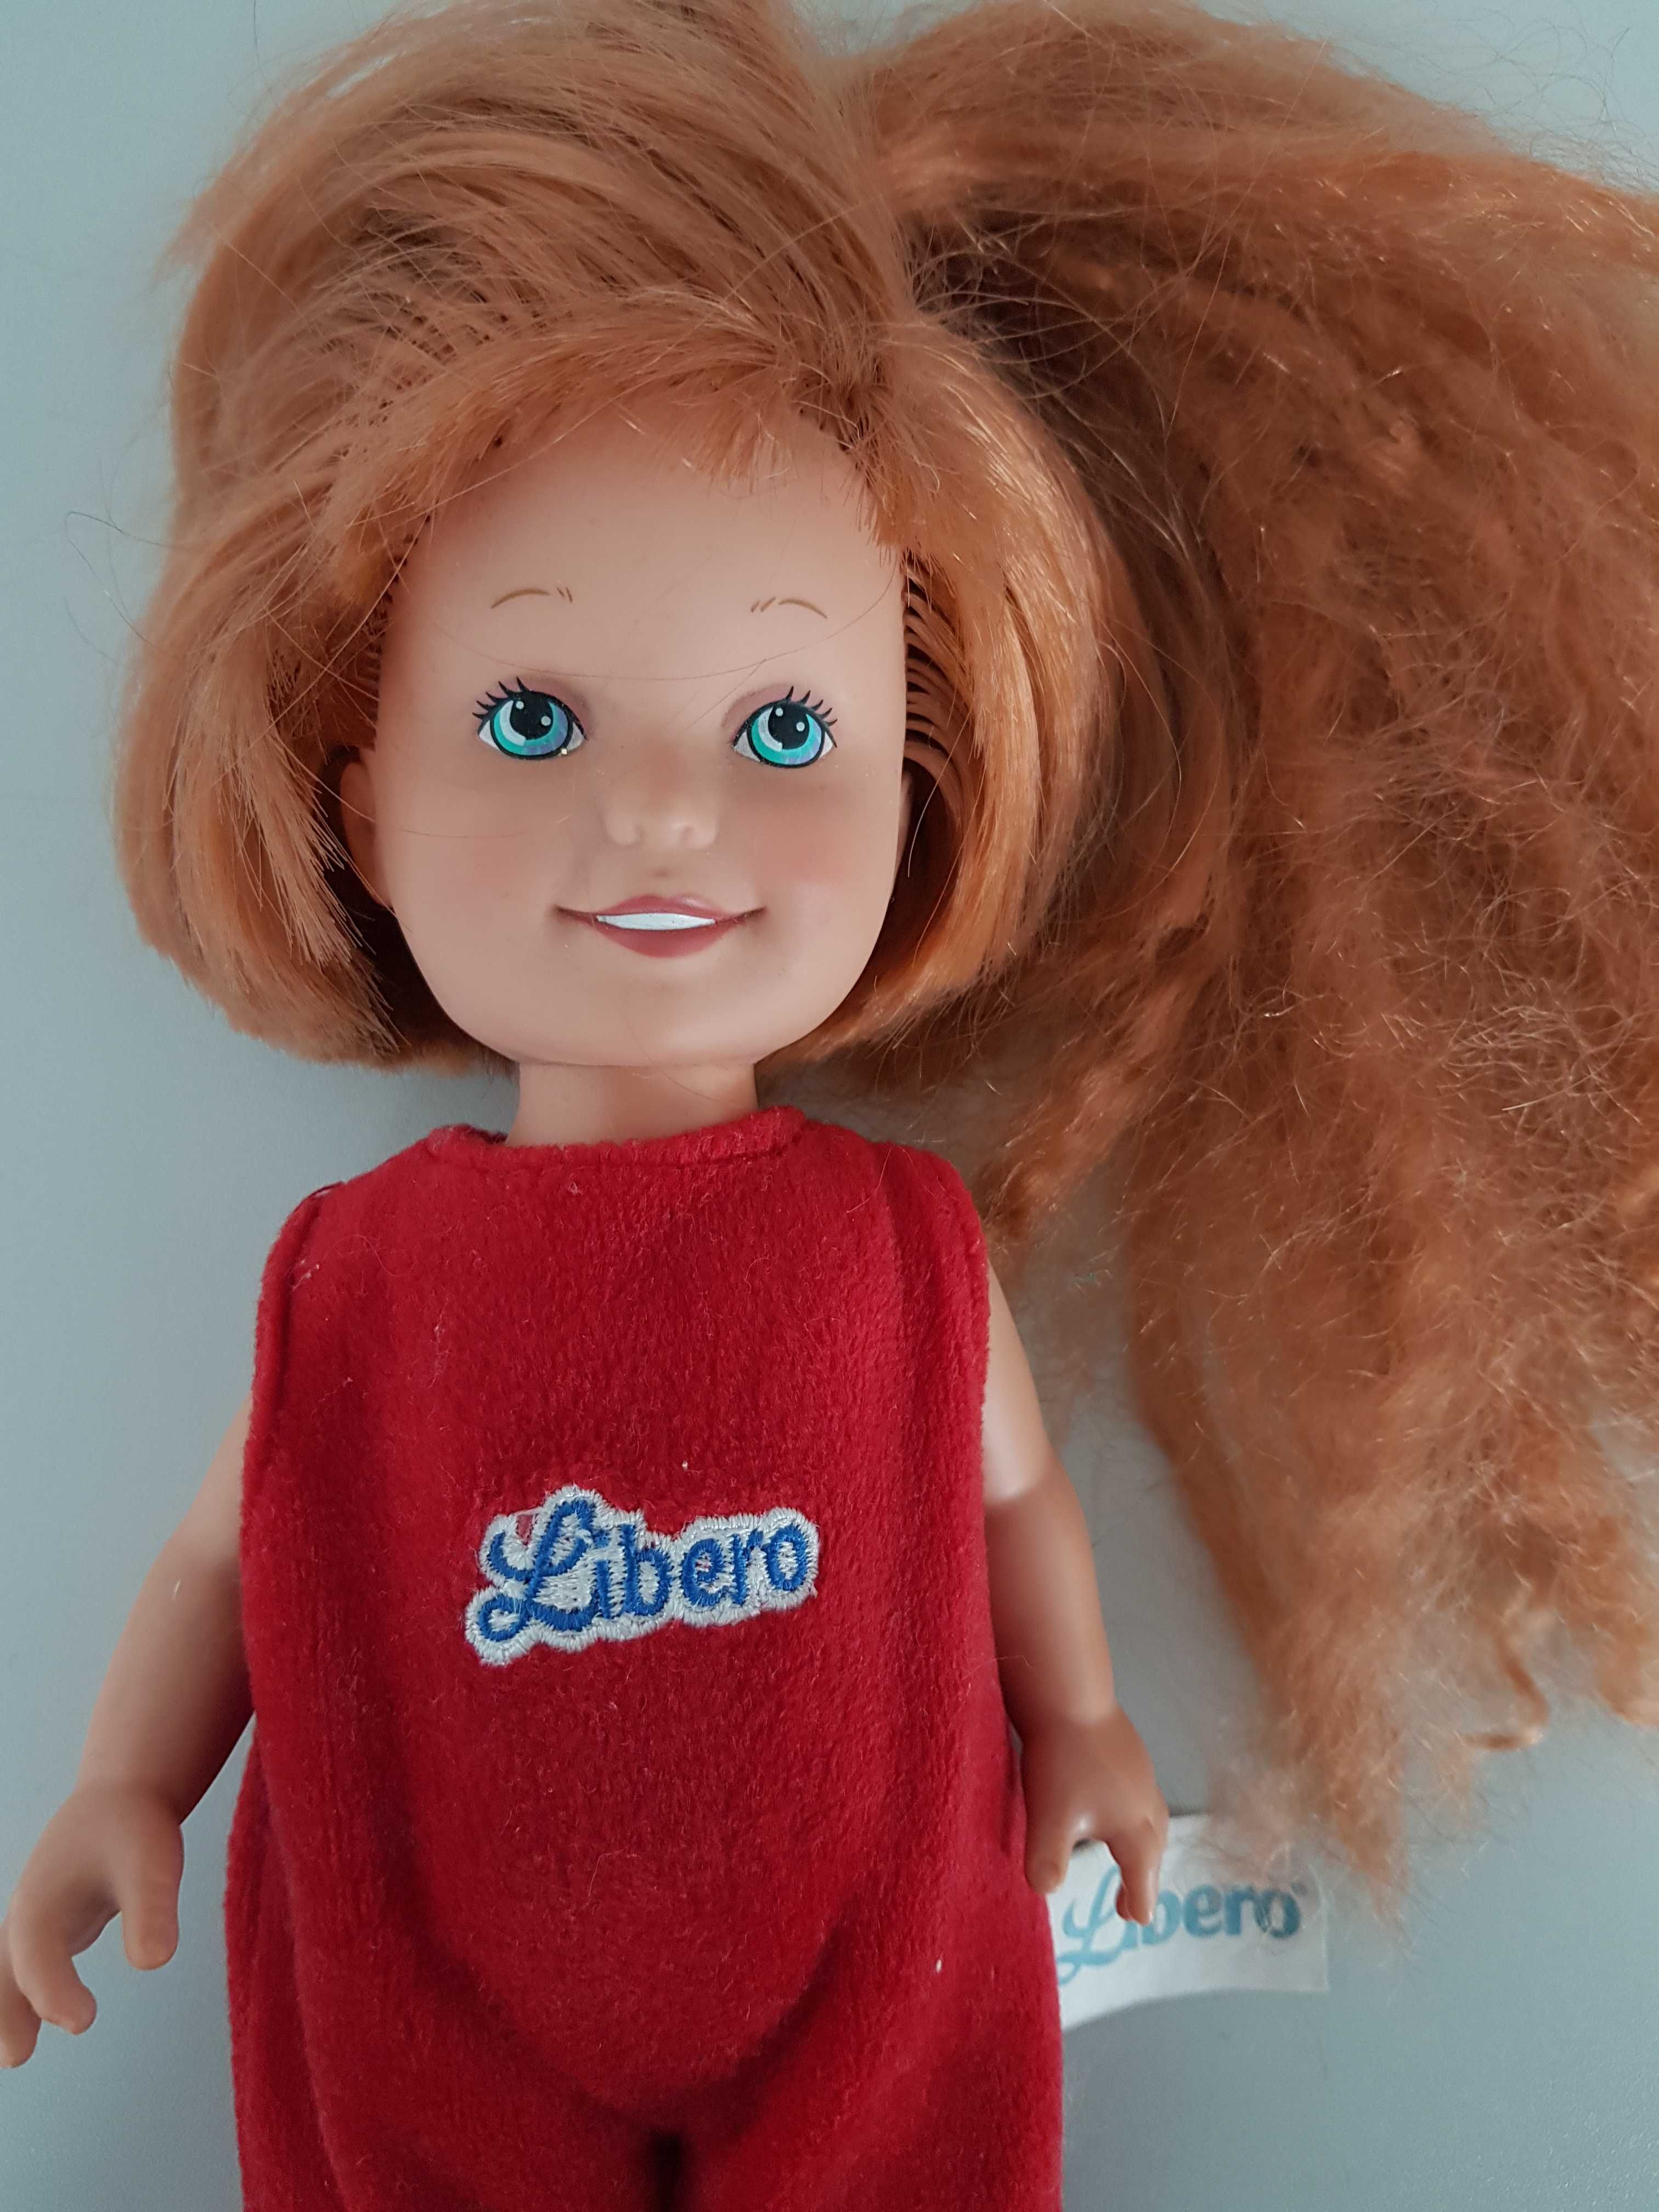 Playskool - Libero 1987 rok vintage - piękna lalka której rosną włosy